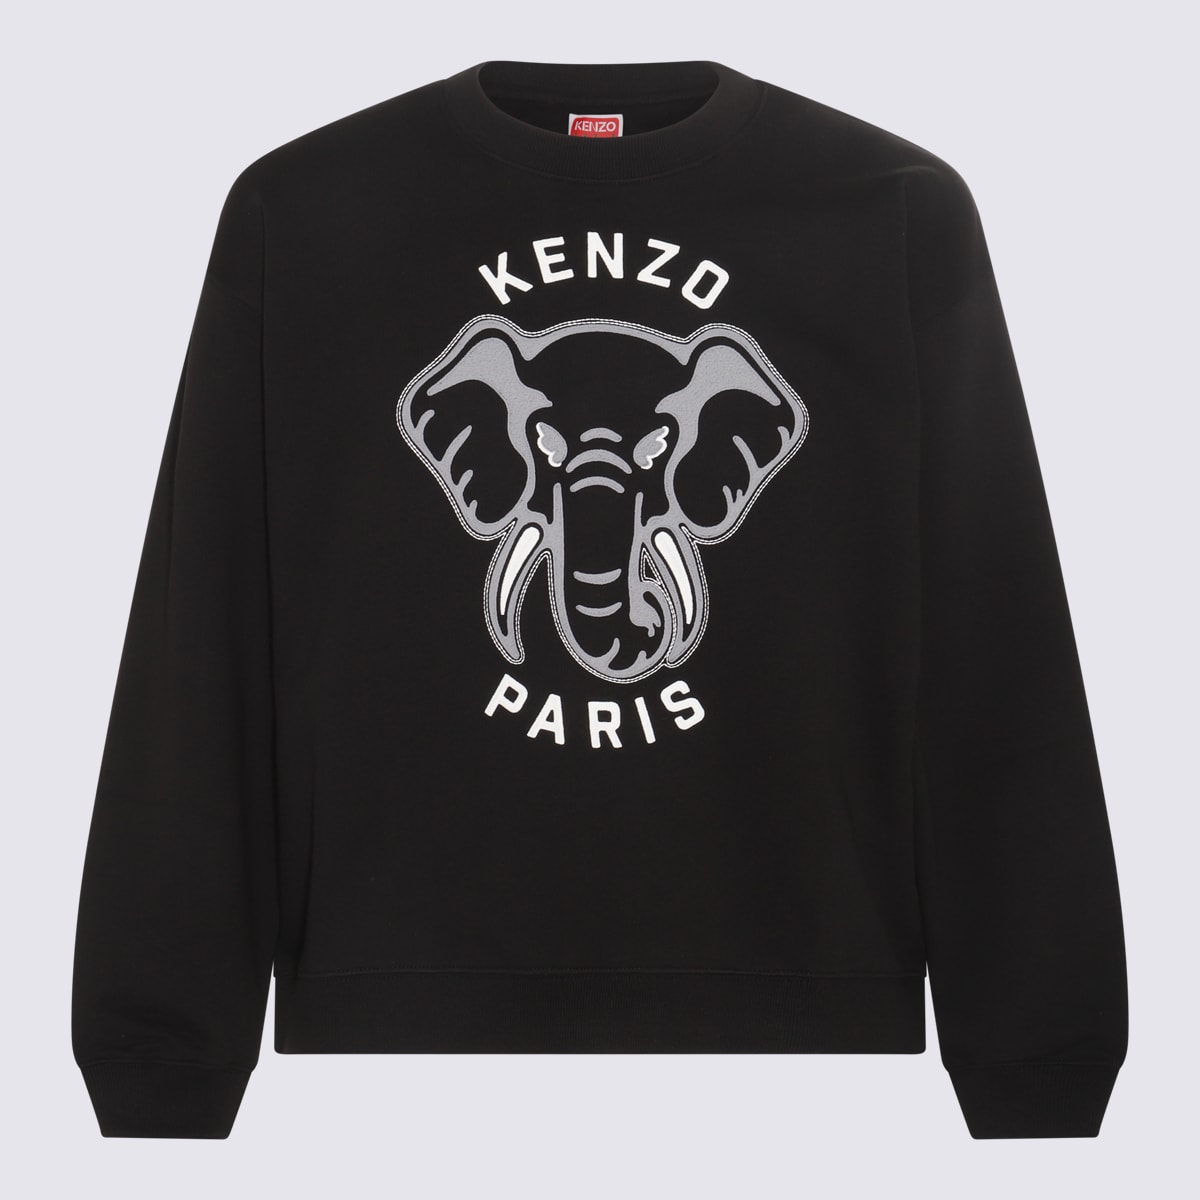 Kenzo Black, Grey And White Cotton Sweatshirt